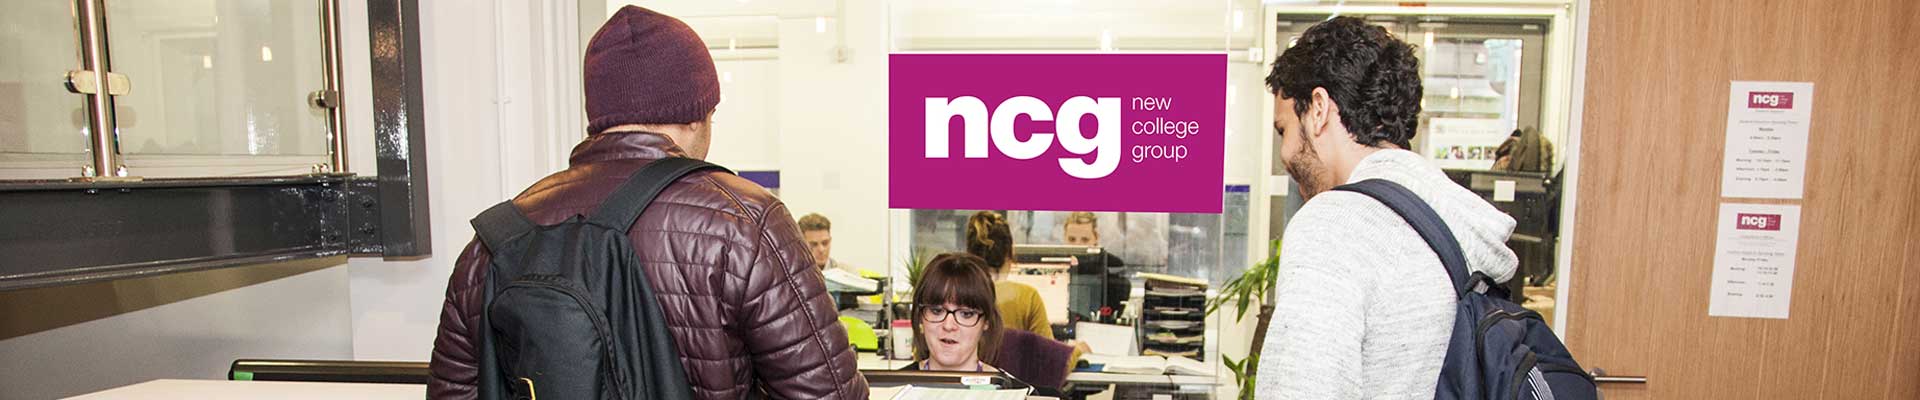 New College Group (NCG) - Manchester görseli